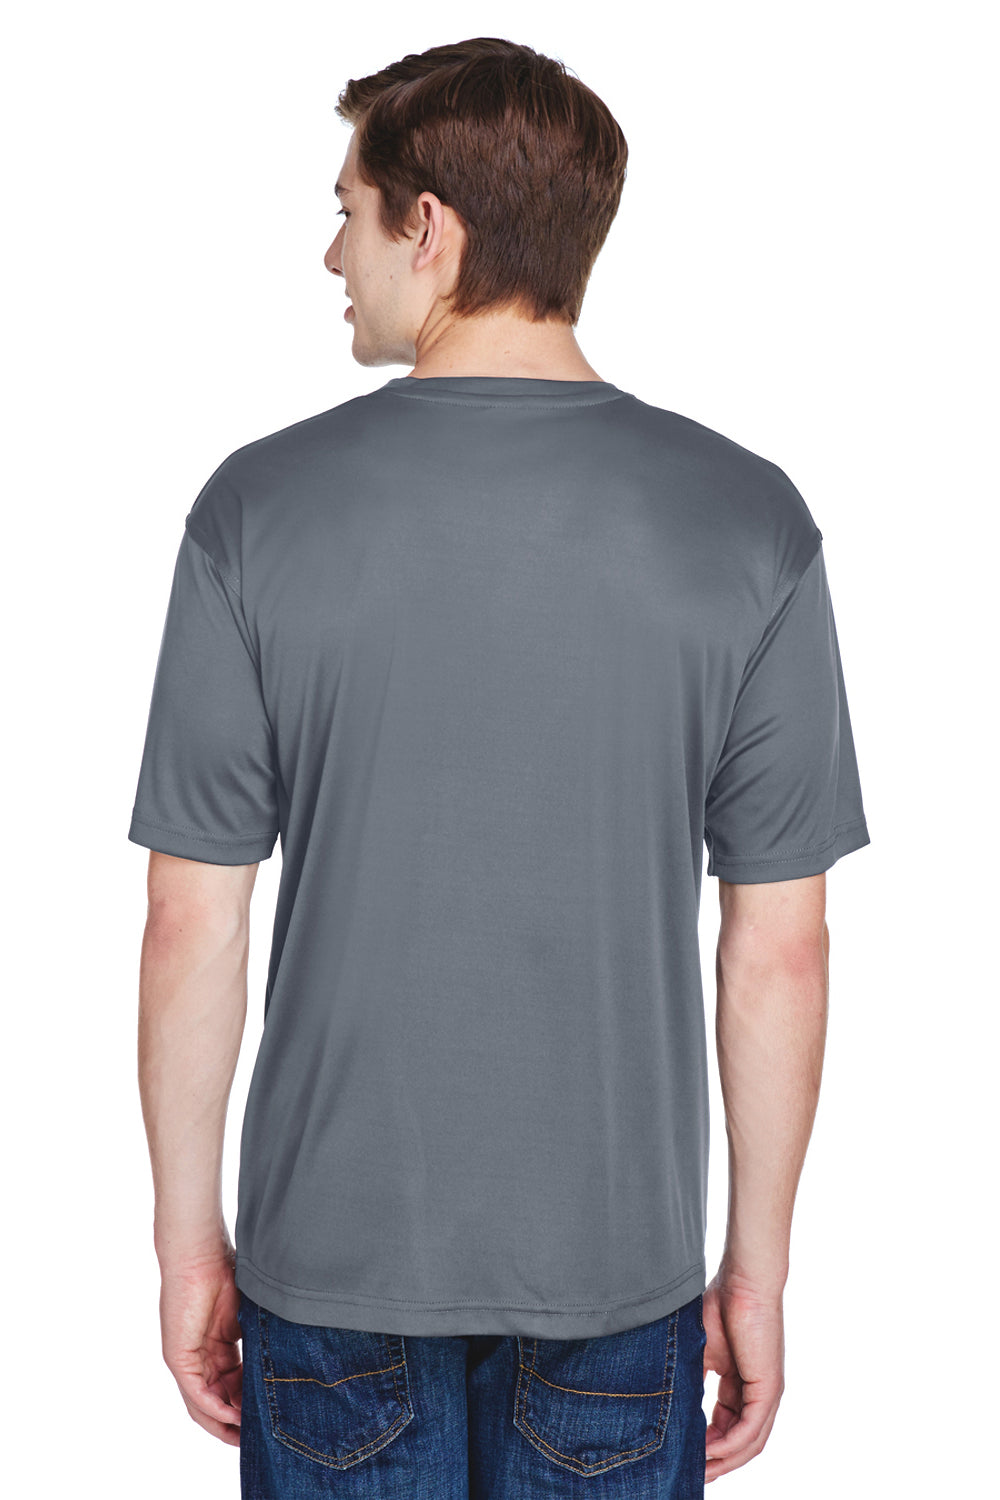 UltraClub 8620 Mens Cool & Dry Performance Moisture Wicking Short Sleeve Crewneck T-Shirt Charcoal Grey Back